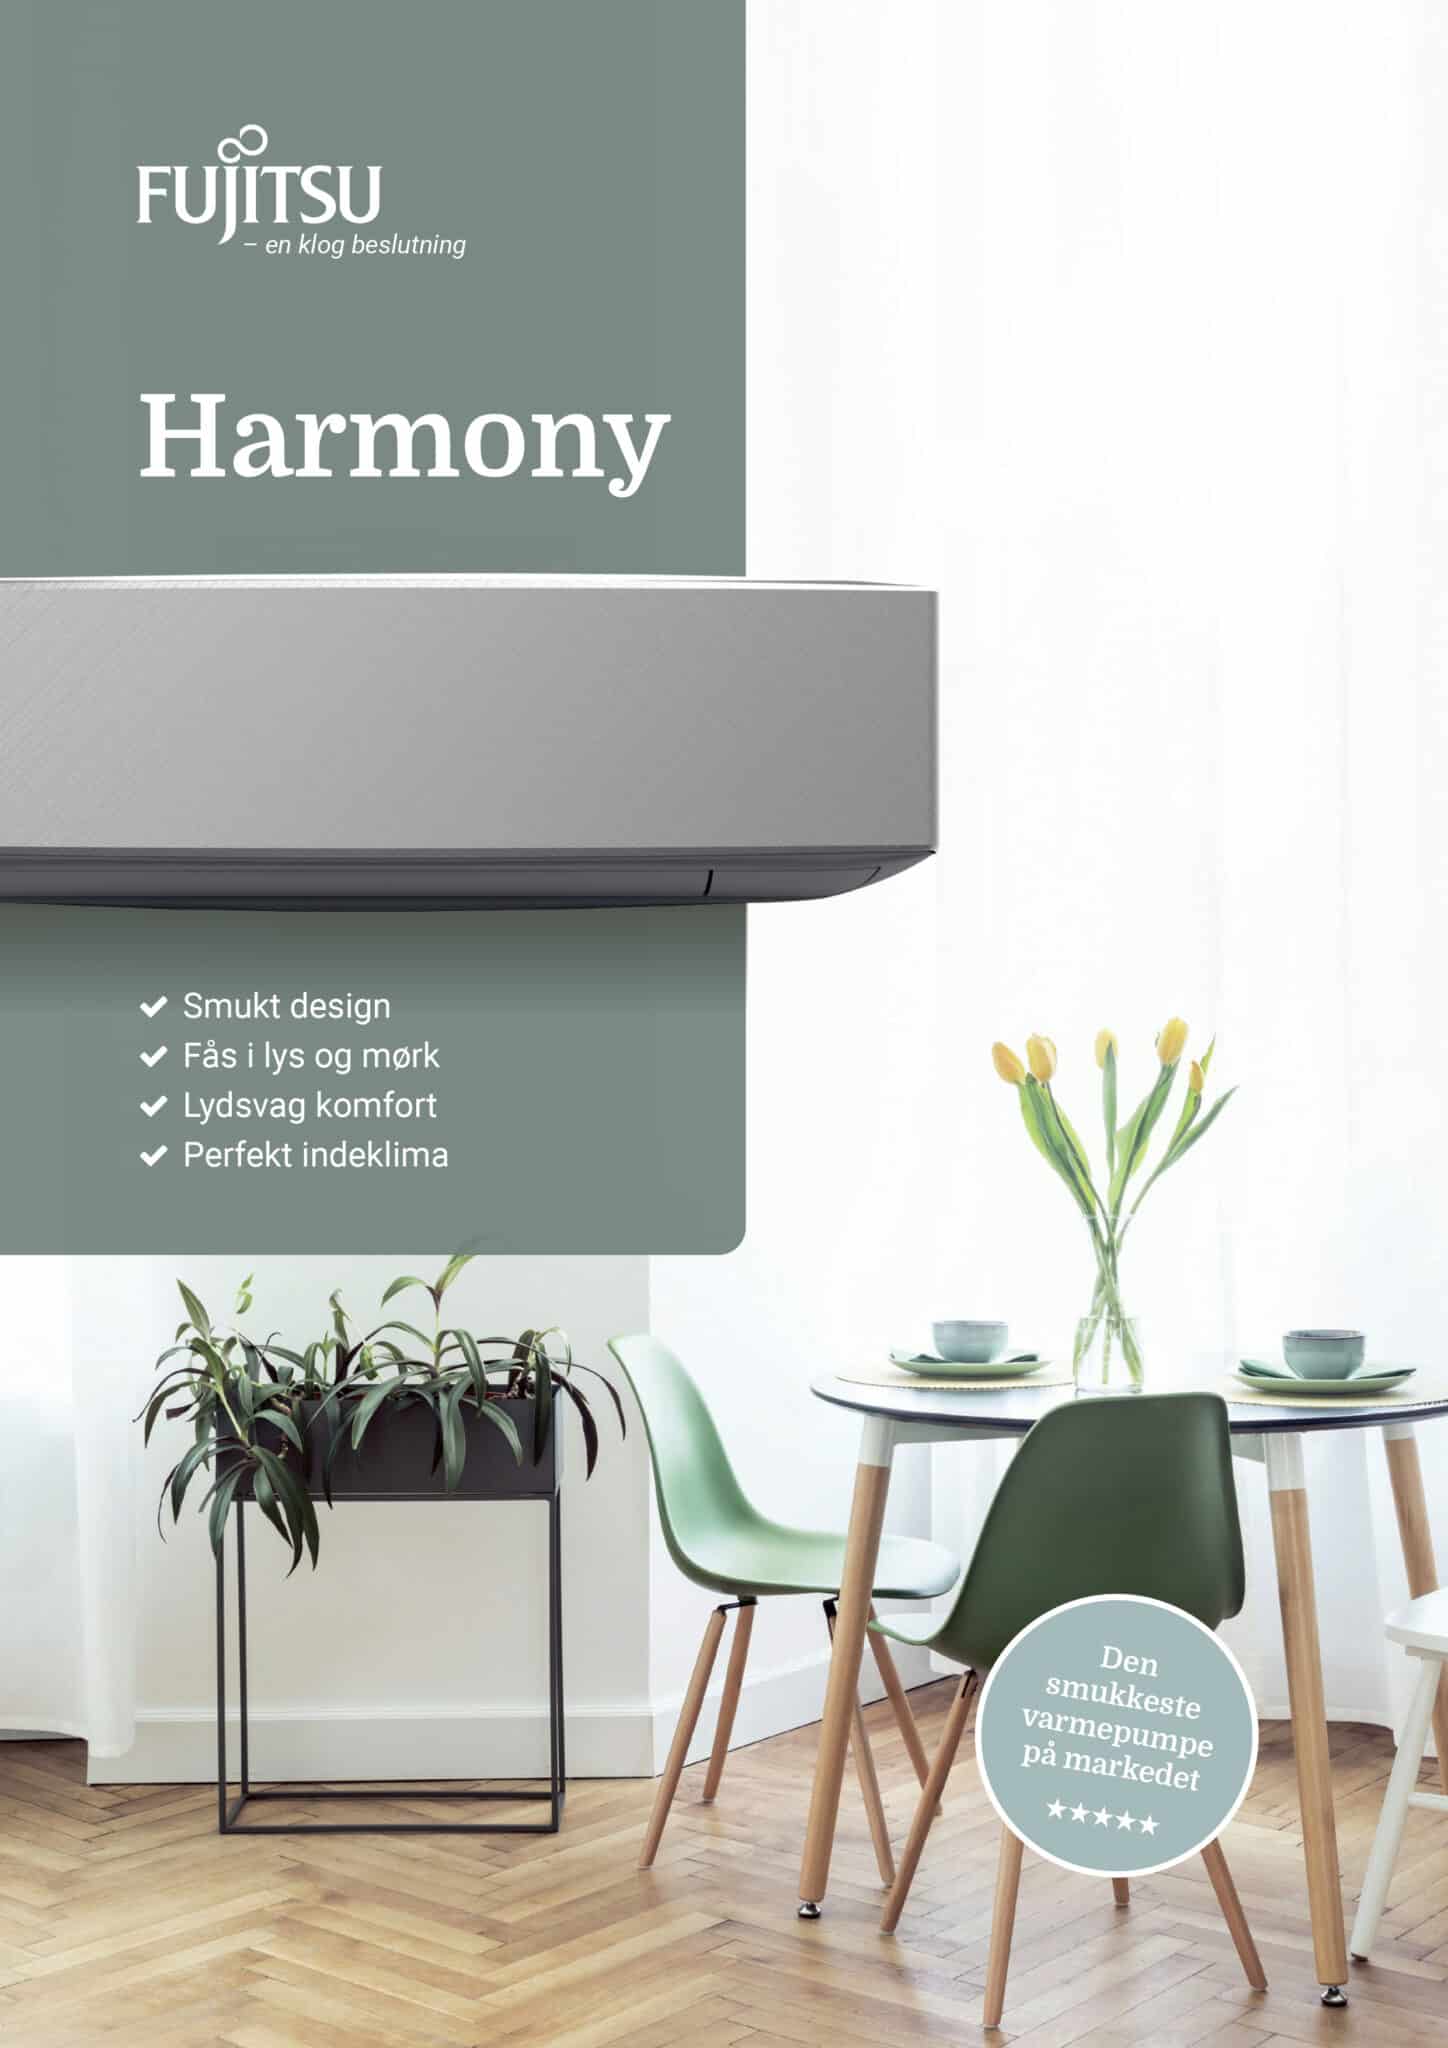 Fujitsu Harmony Brochure